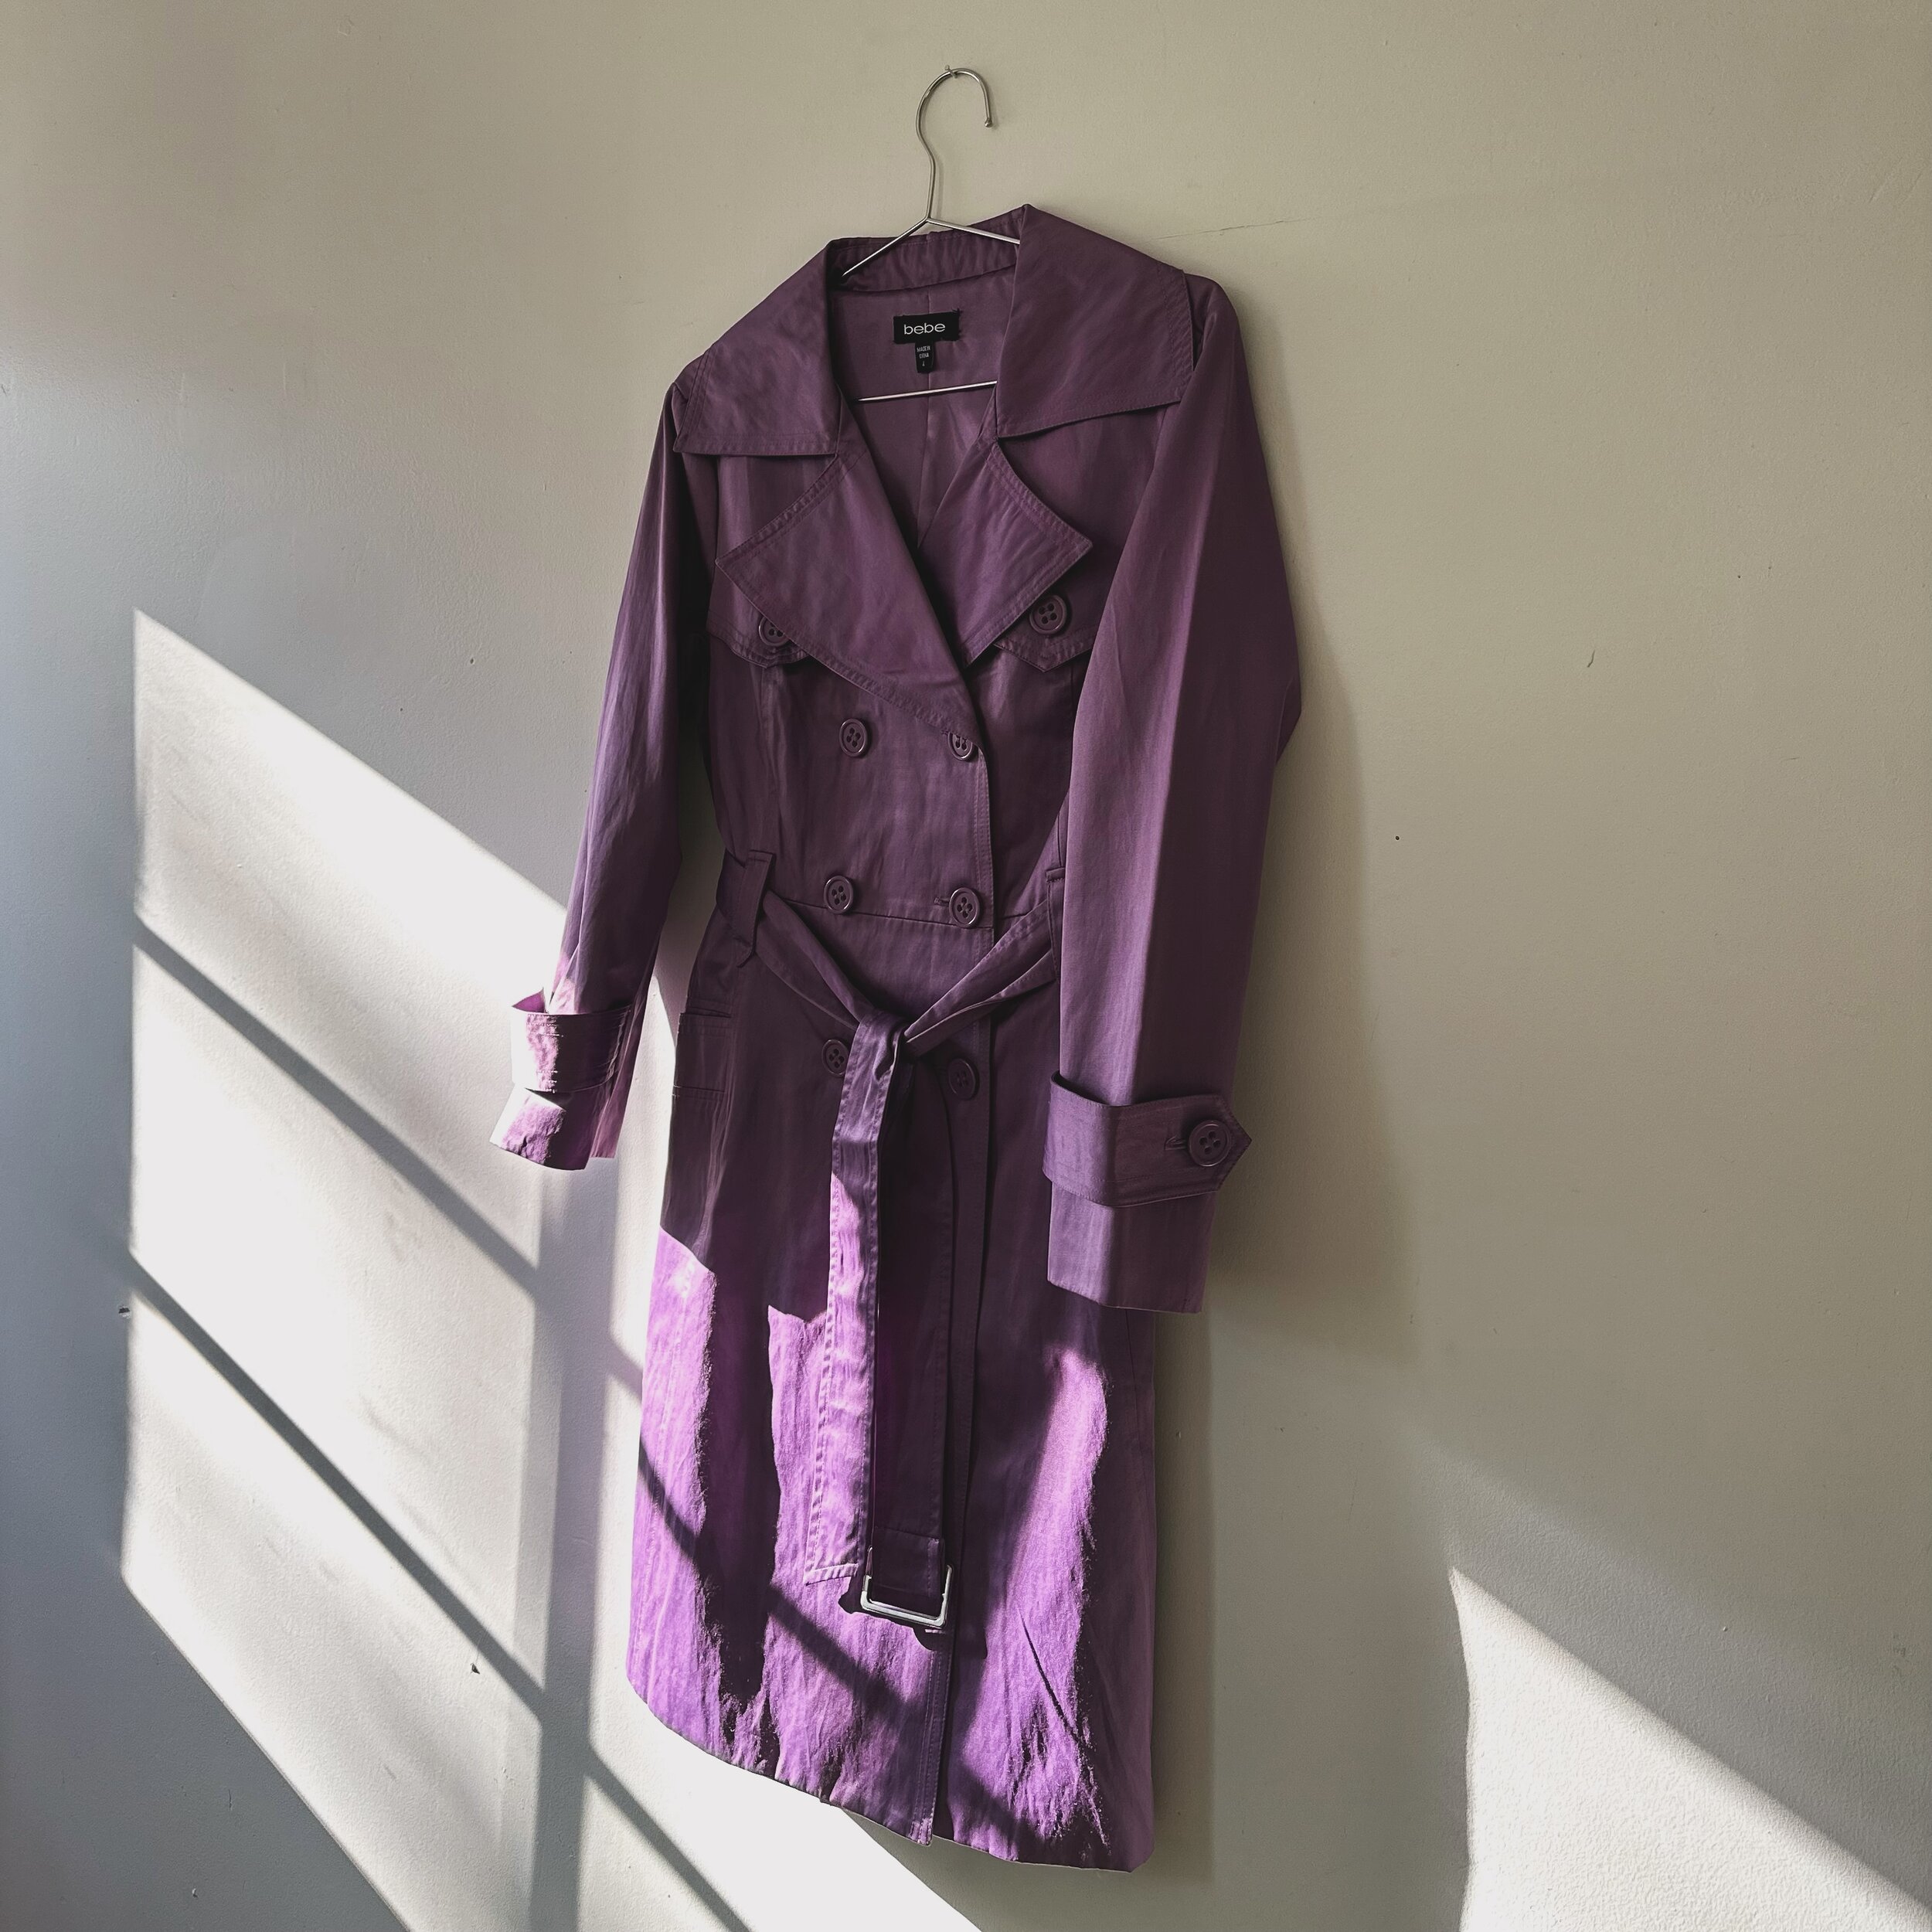 💜 &bull; 💜 &bull; 💜
.
Satin Purple Trench Coat x bebe available today at Not-A-Normal Market ✨
.
📍 @99scott_ 
🗓️ March 24
🗺️ 99 Scott Avenue, Brooklyn
⏰ 10 am - 5 pm
.
.
.
.
.
#sincerelysubjectmatter
#notanormalmarket
#normalnyc
#bushwick
#99sc